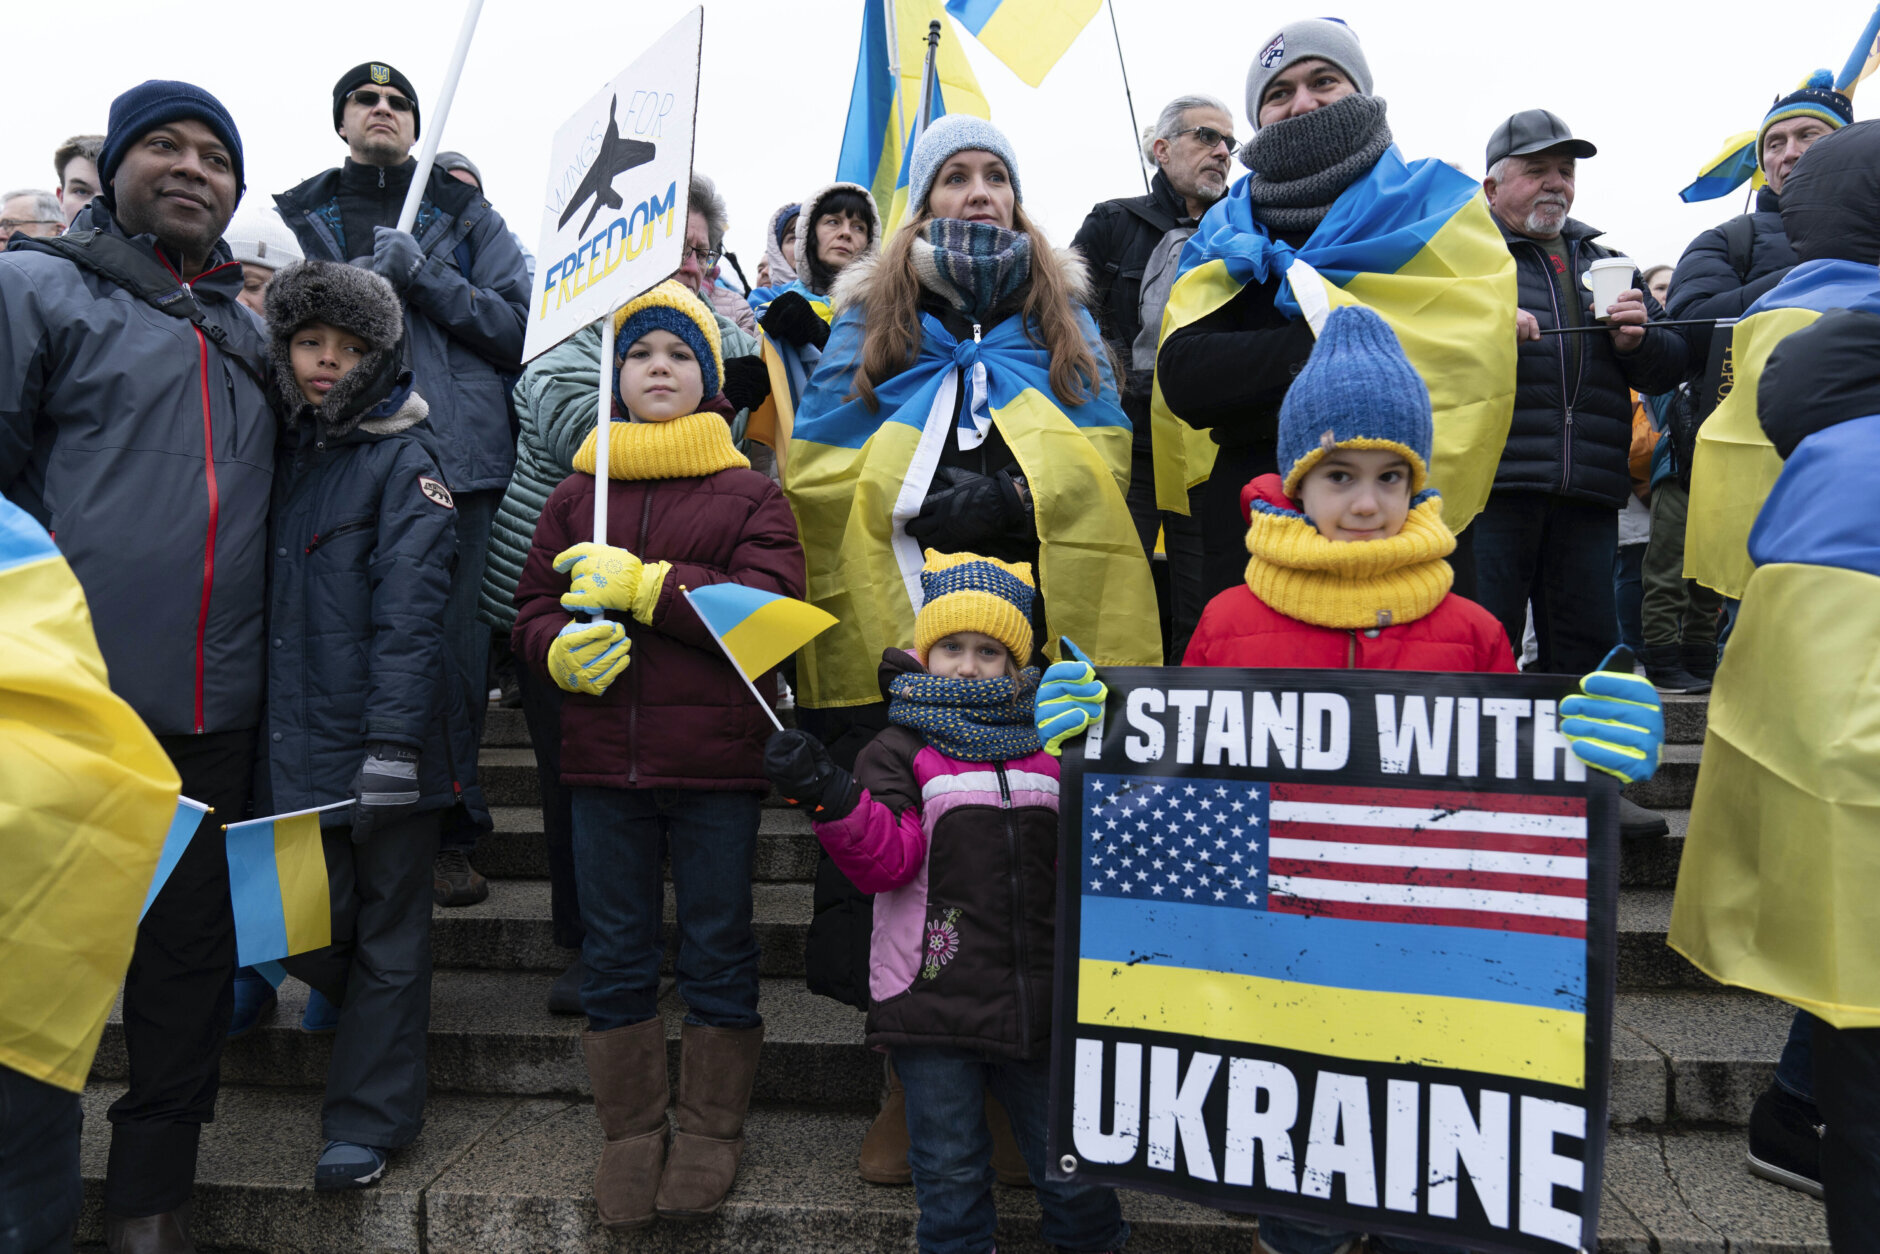 Demonstrators rally at Lincoln Memorial in support of Ukraine in Washington, Saturday, Feb. 25, 2023. (AP Photo/Jose Luis Magana)